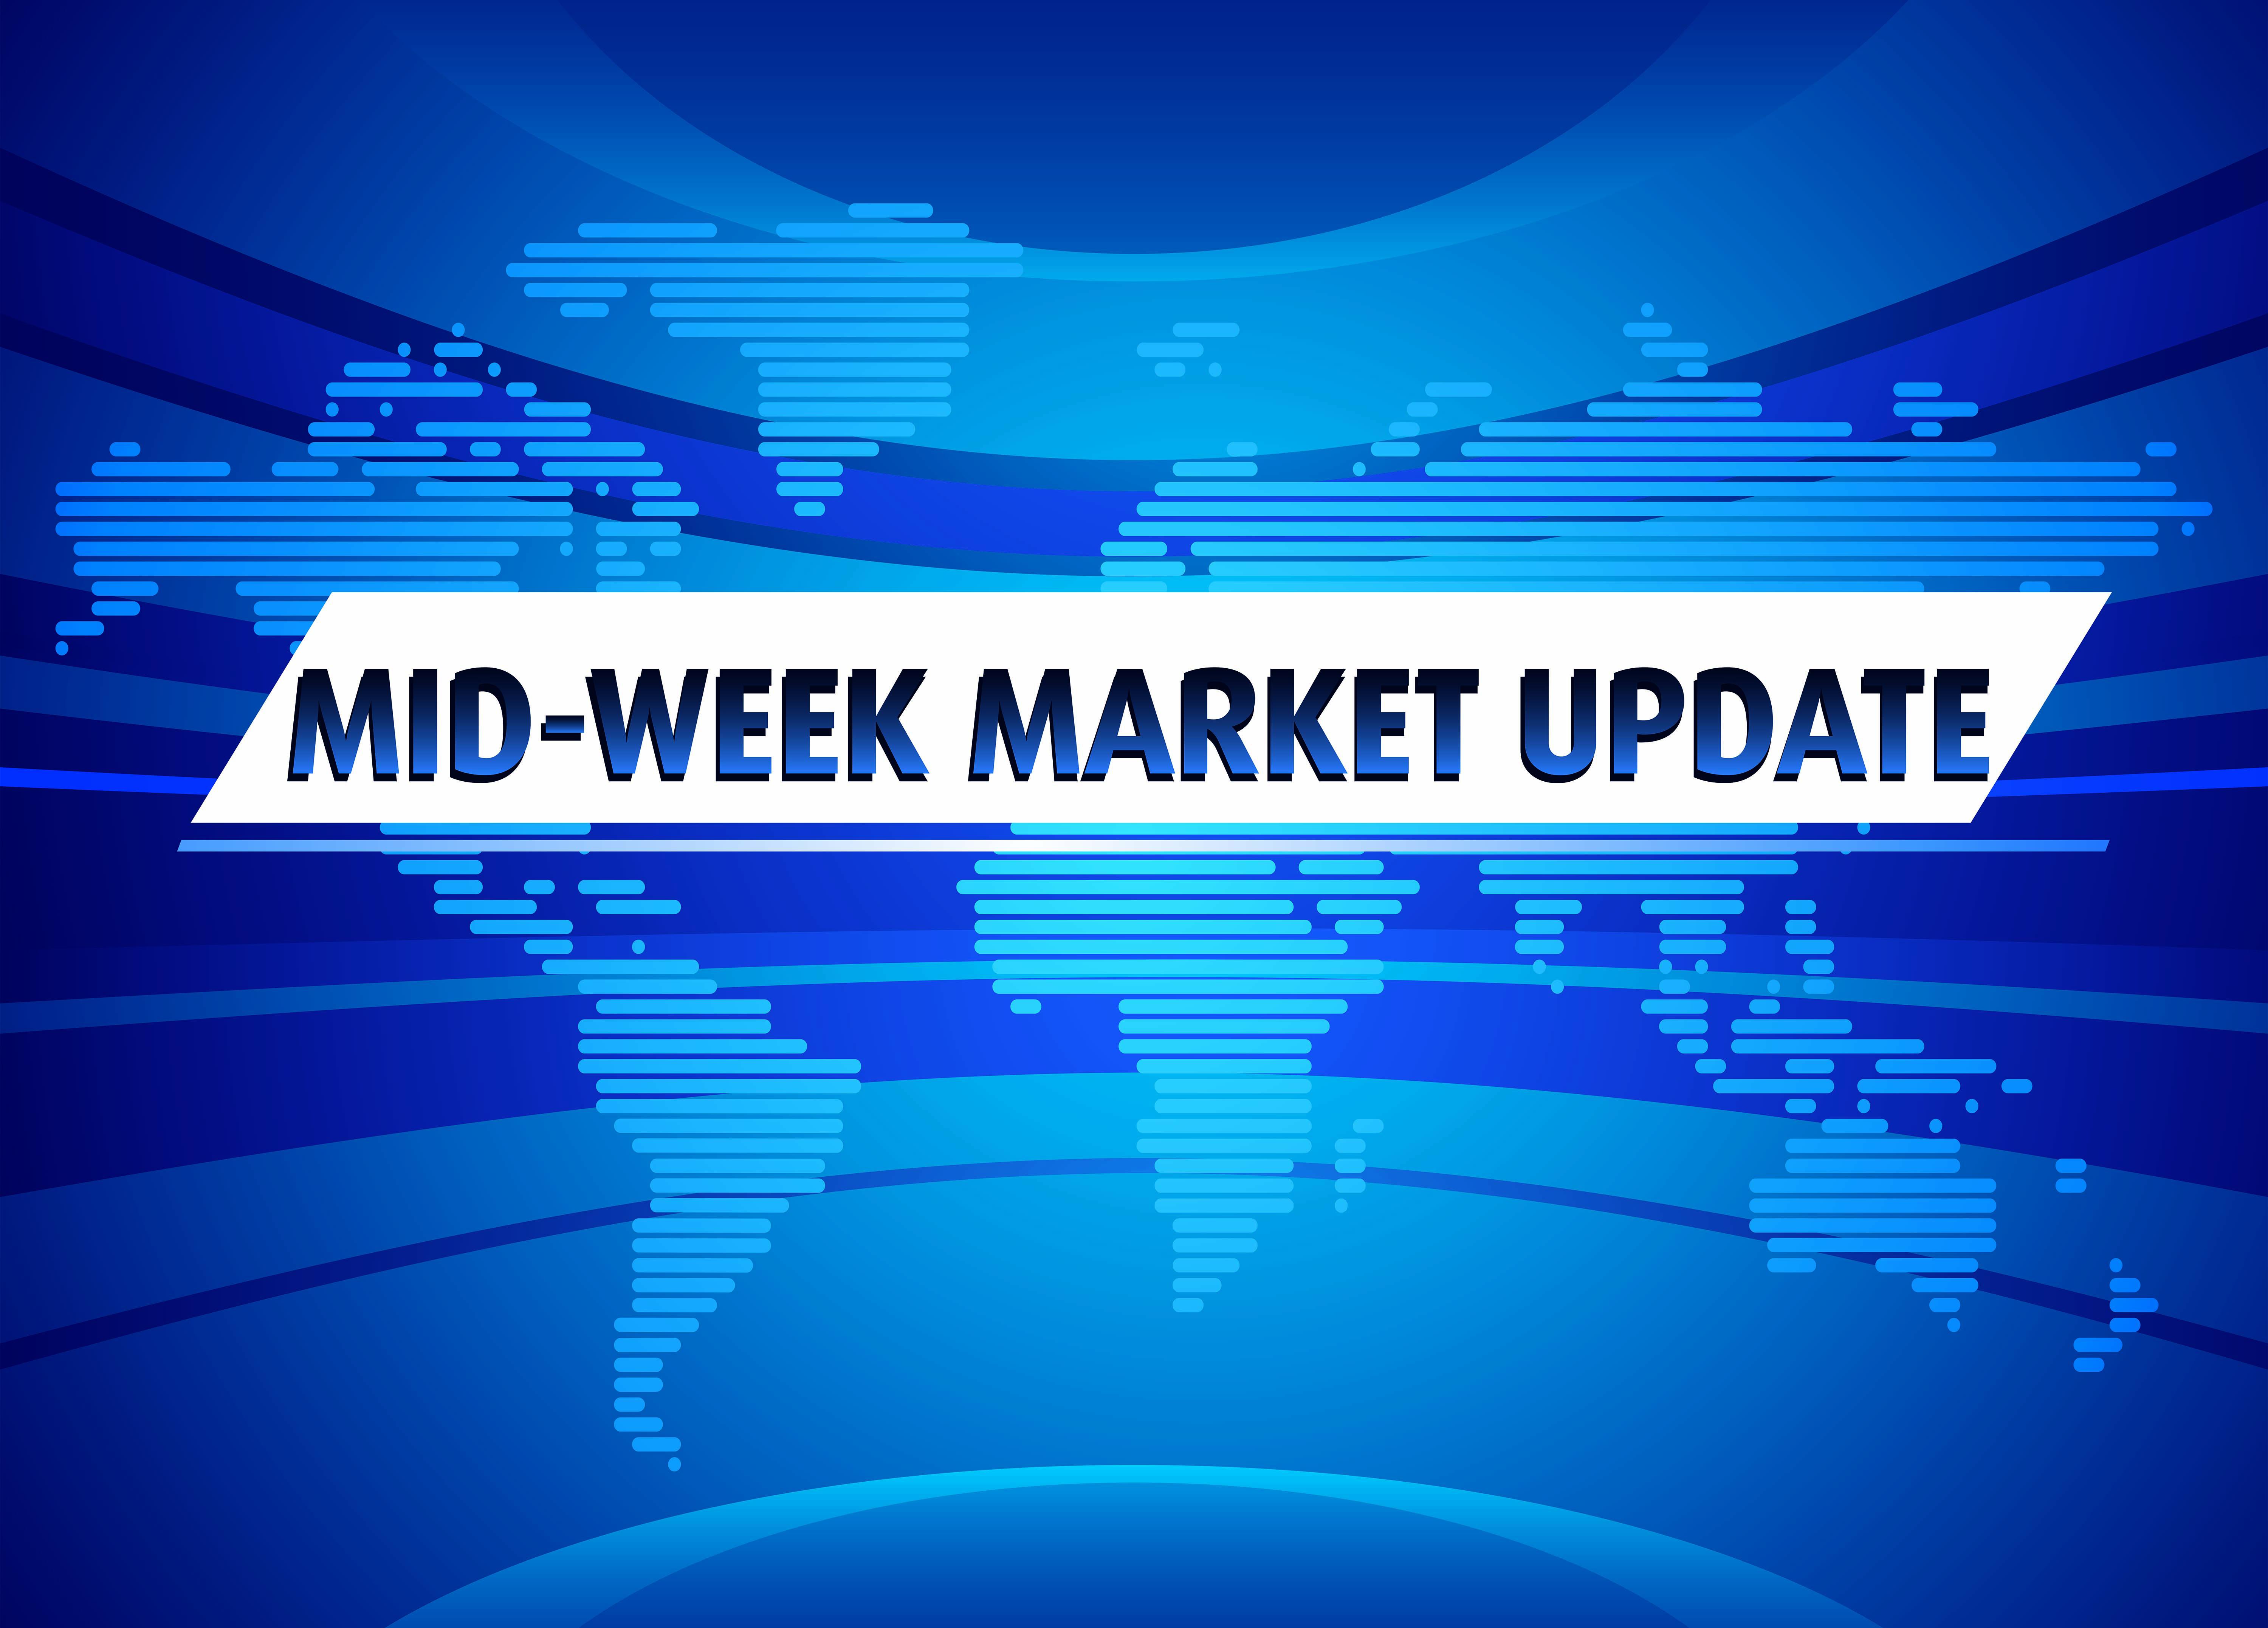 Mid-Week Market Update